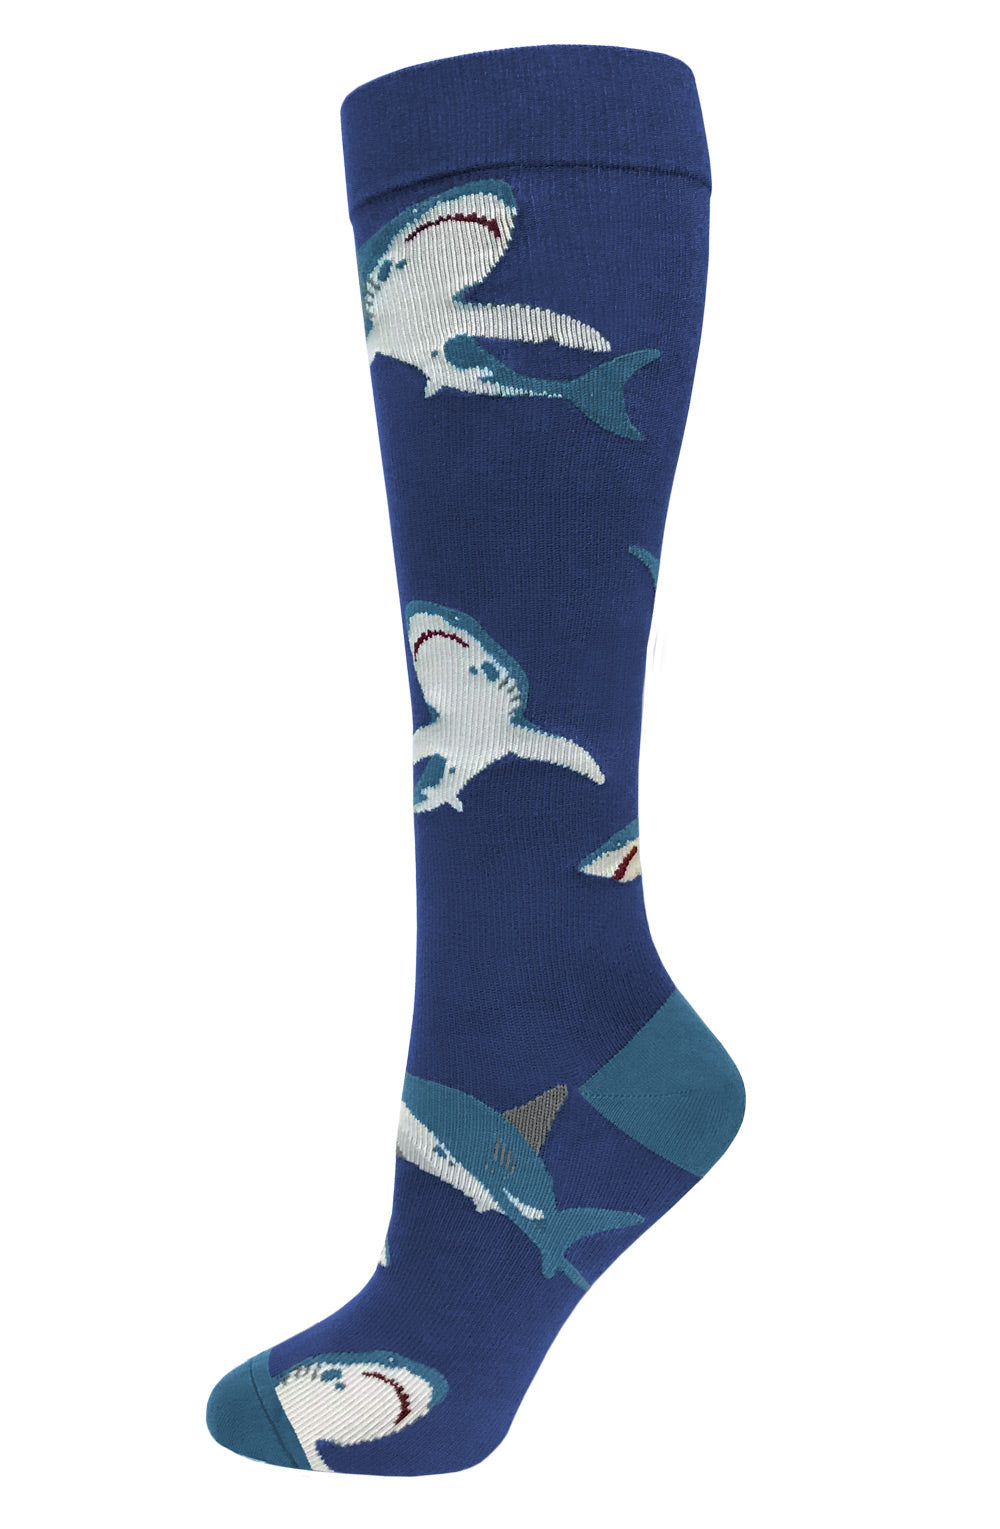 12" Men's Premium Compression Socks by Prestige /   Sharks Ocean Blue